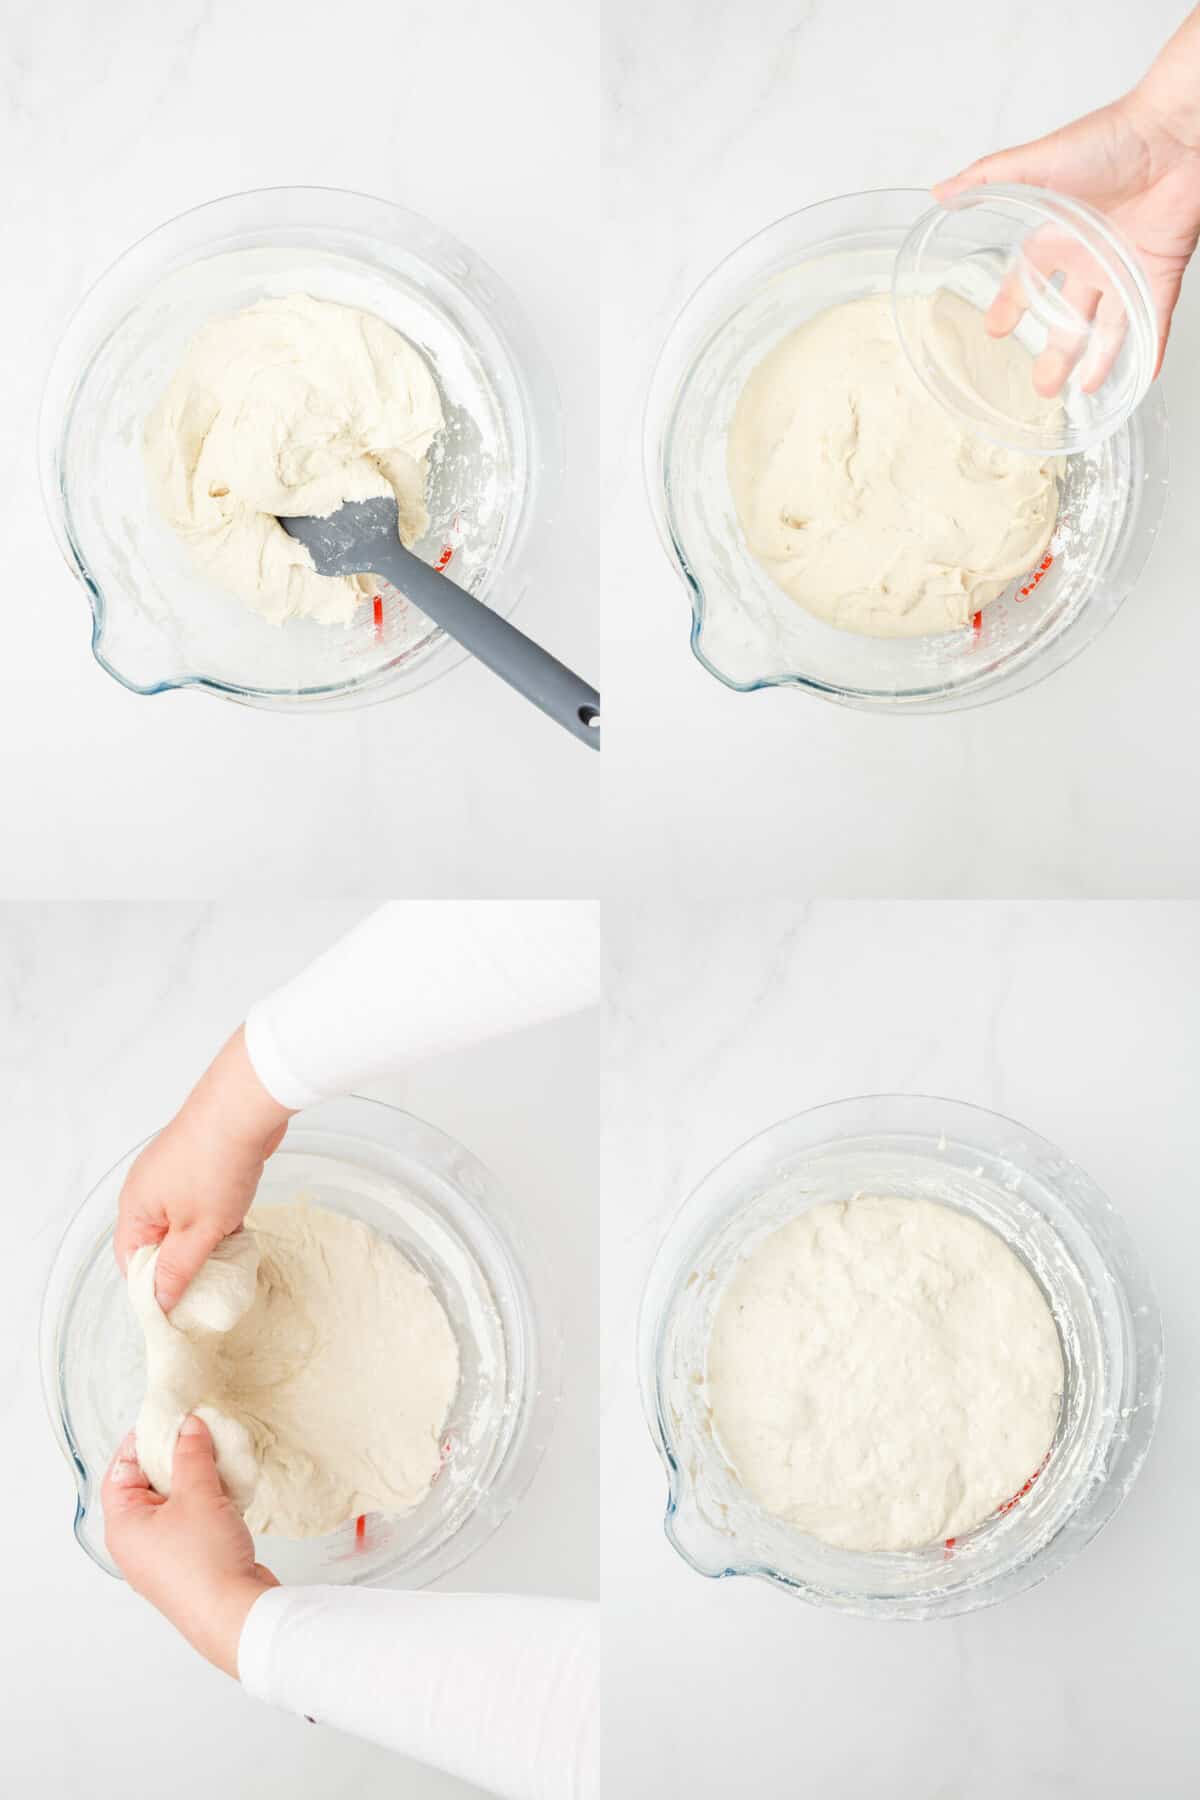 steps to make sourdough bread. 